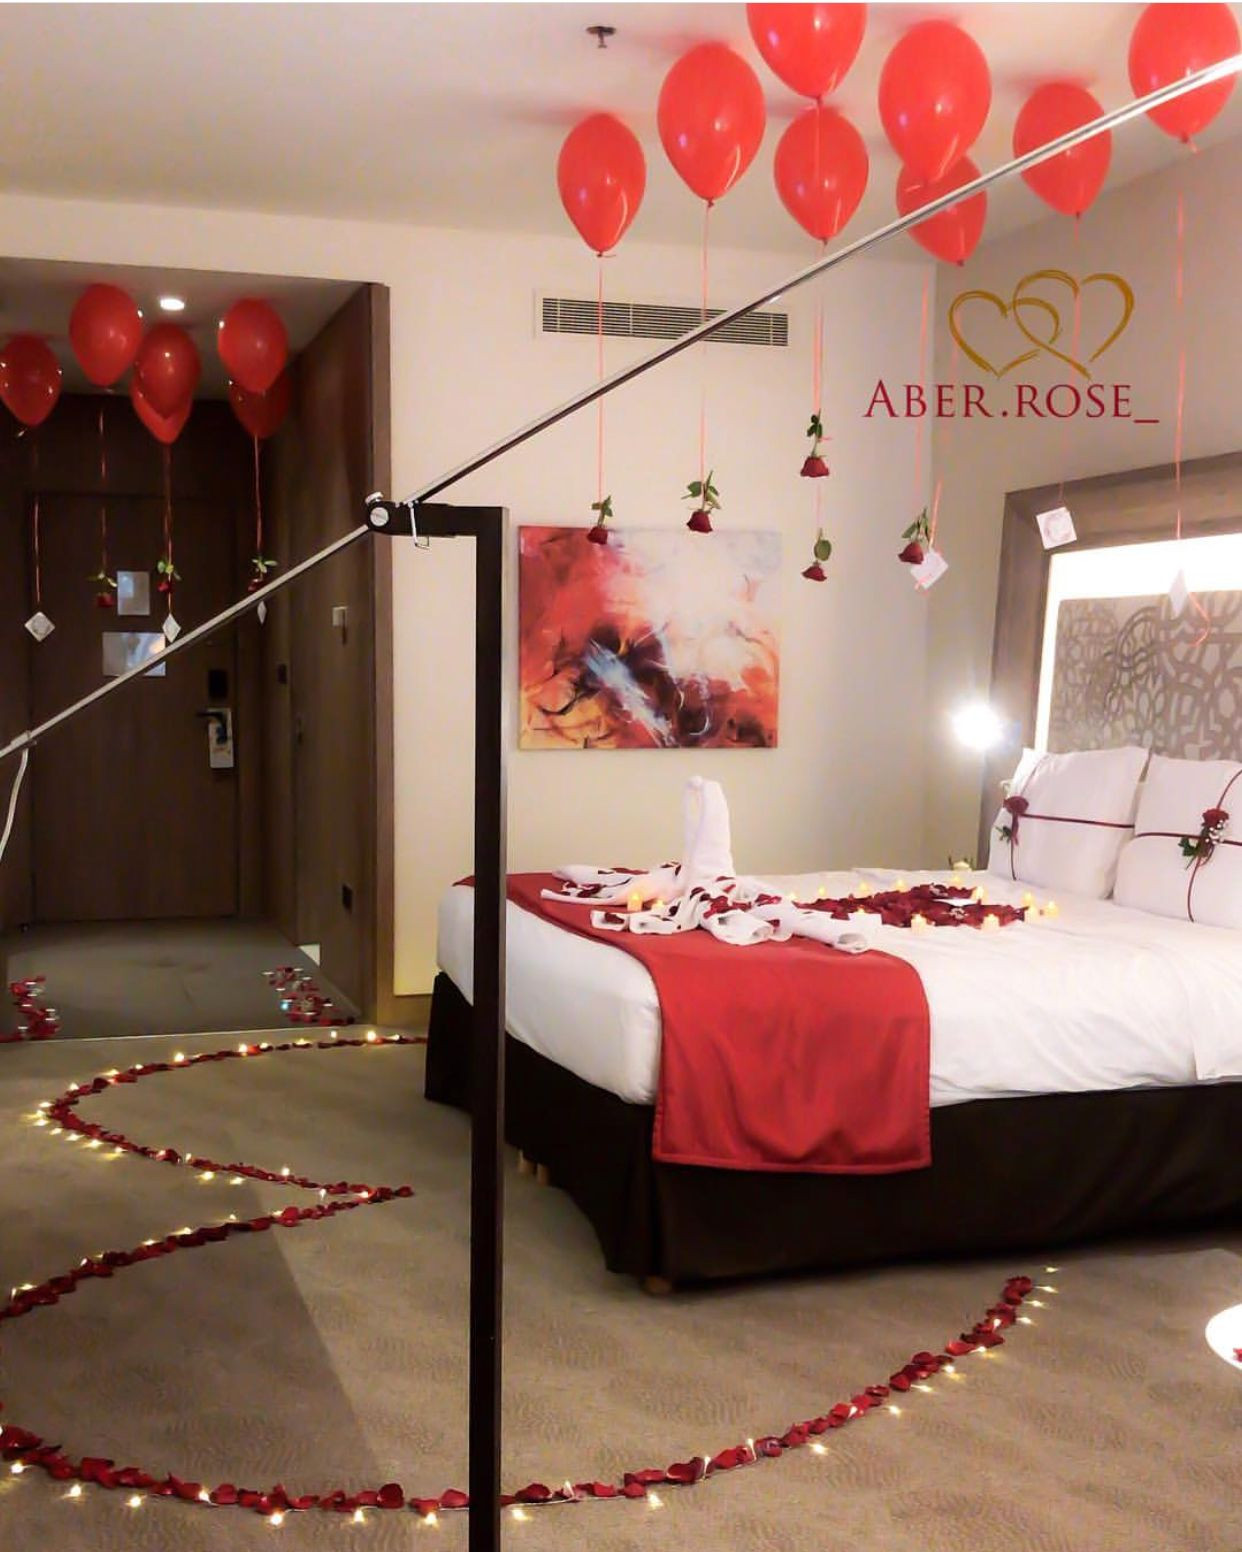 Valentines Day Room Decor
 Surprise Romantic Room Decorations For Valentines Day